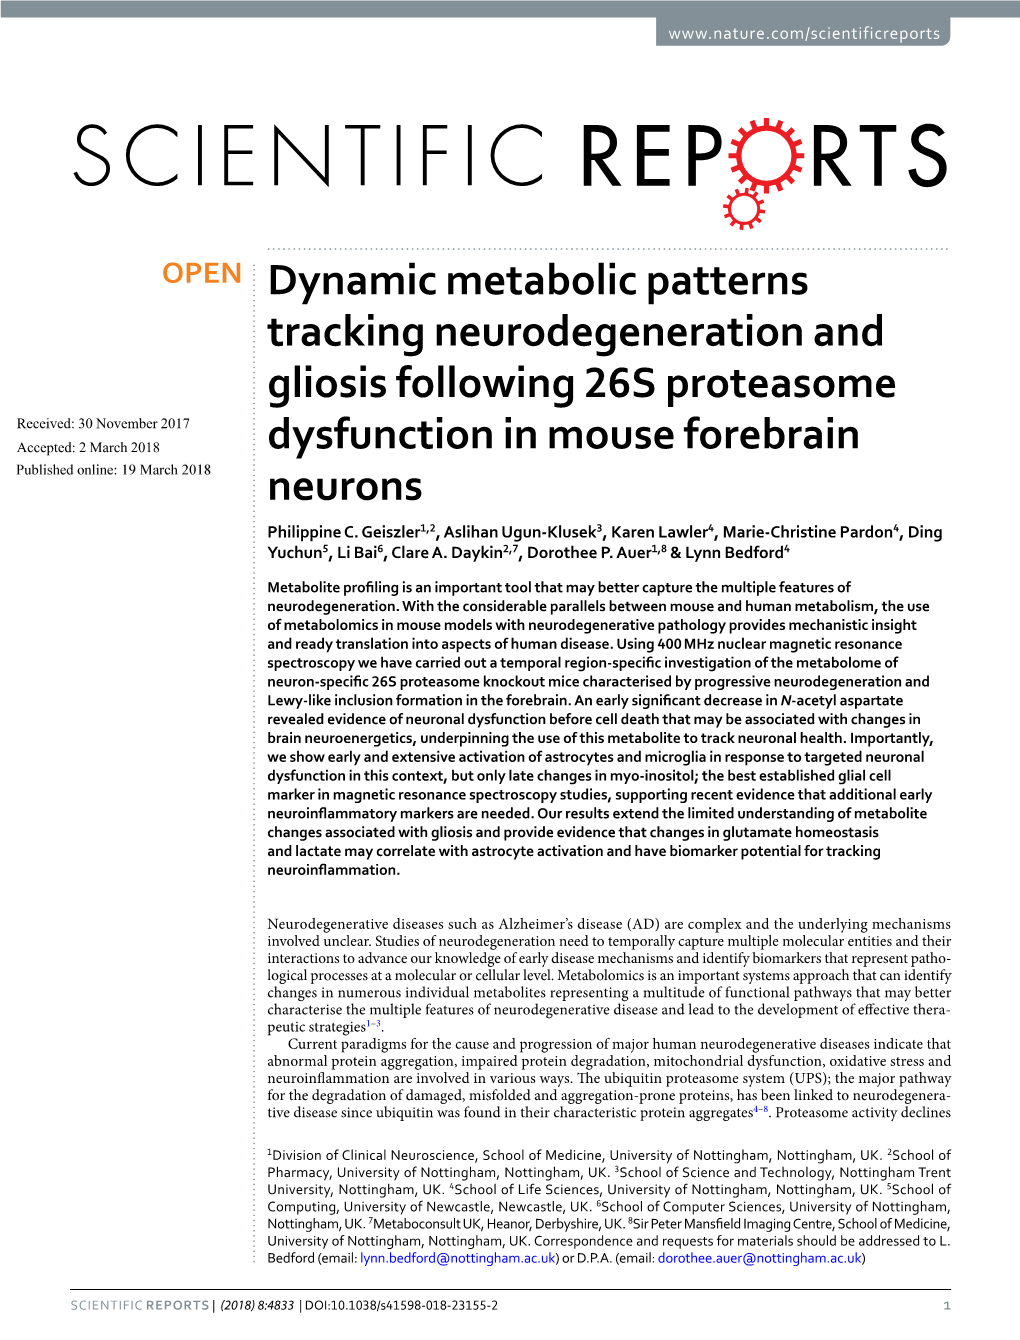 Dynamic Metabolic Patterns Tracking Neurodegeneration and Gliosis